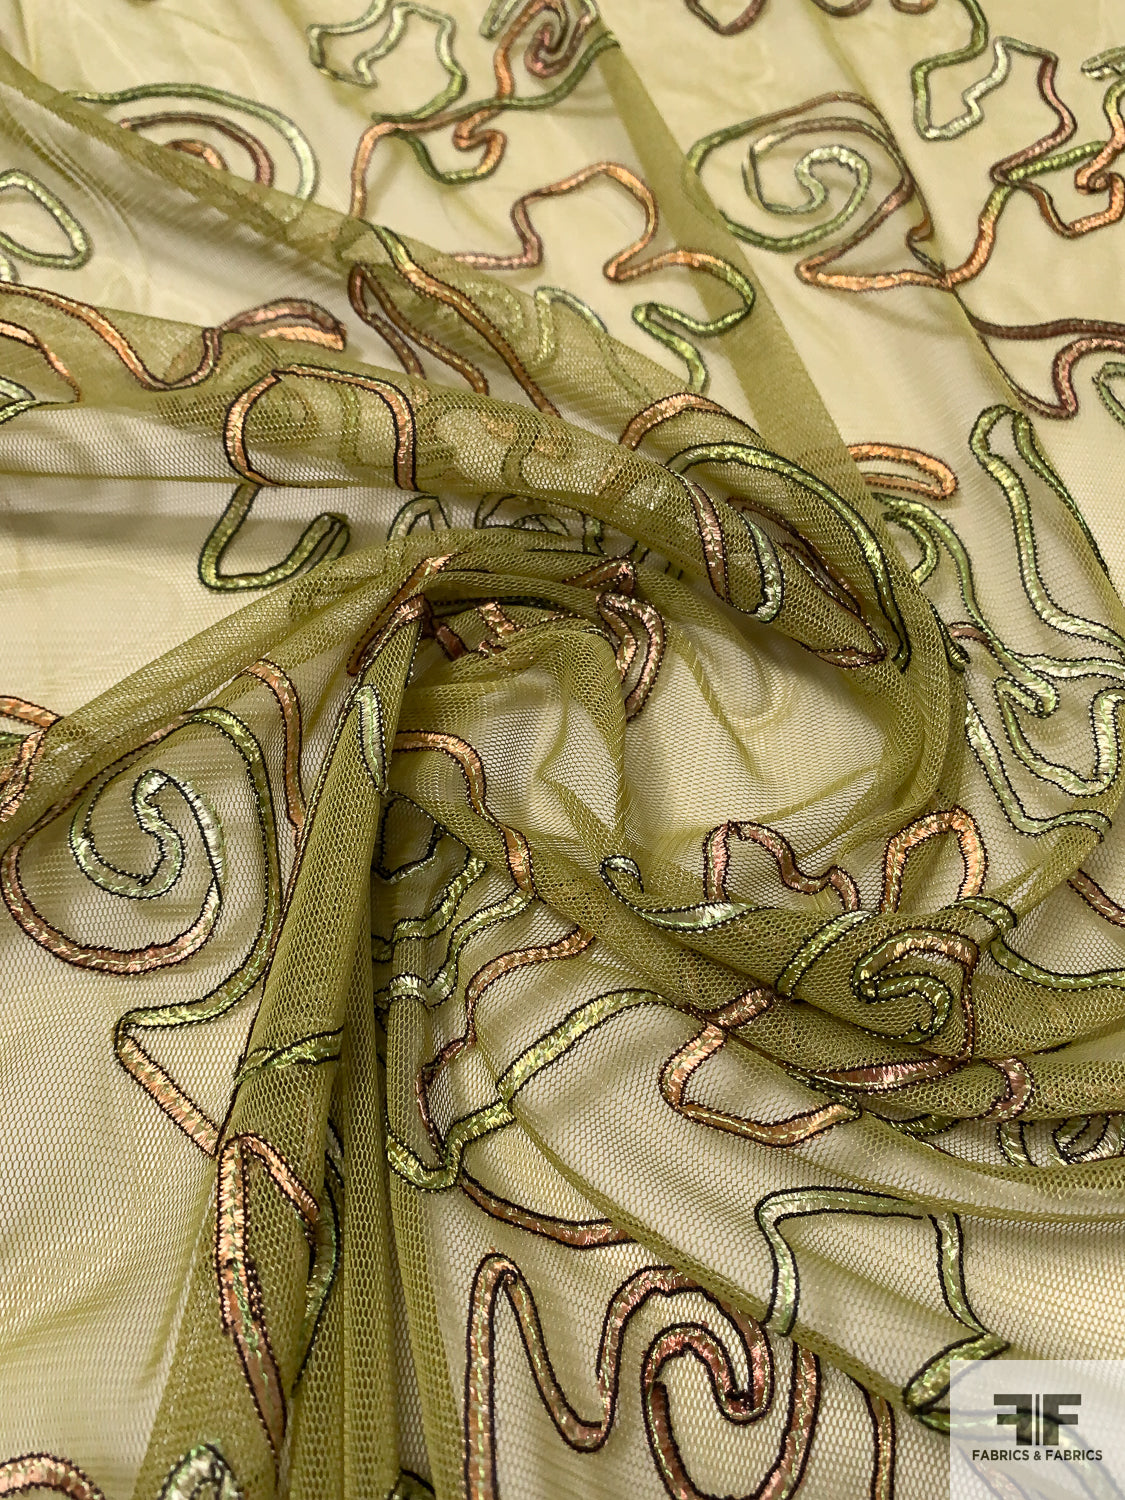 Olive Green Designer 2 1/2 Inch x 10 Yards Velvet Ribbon